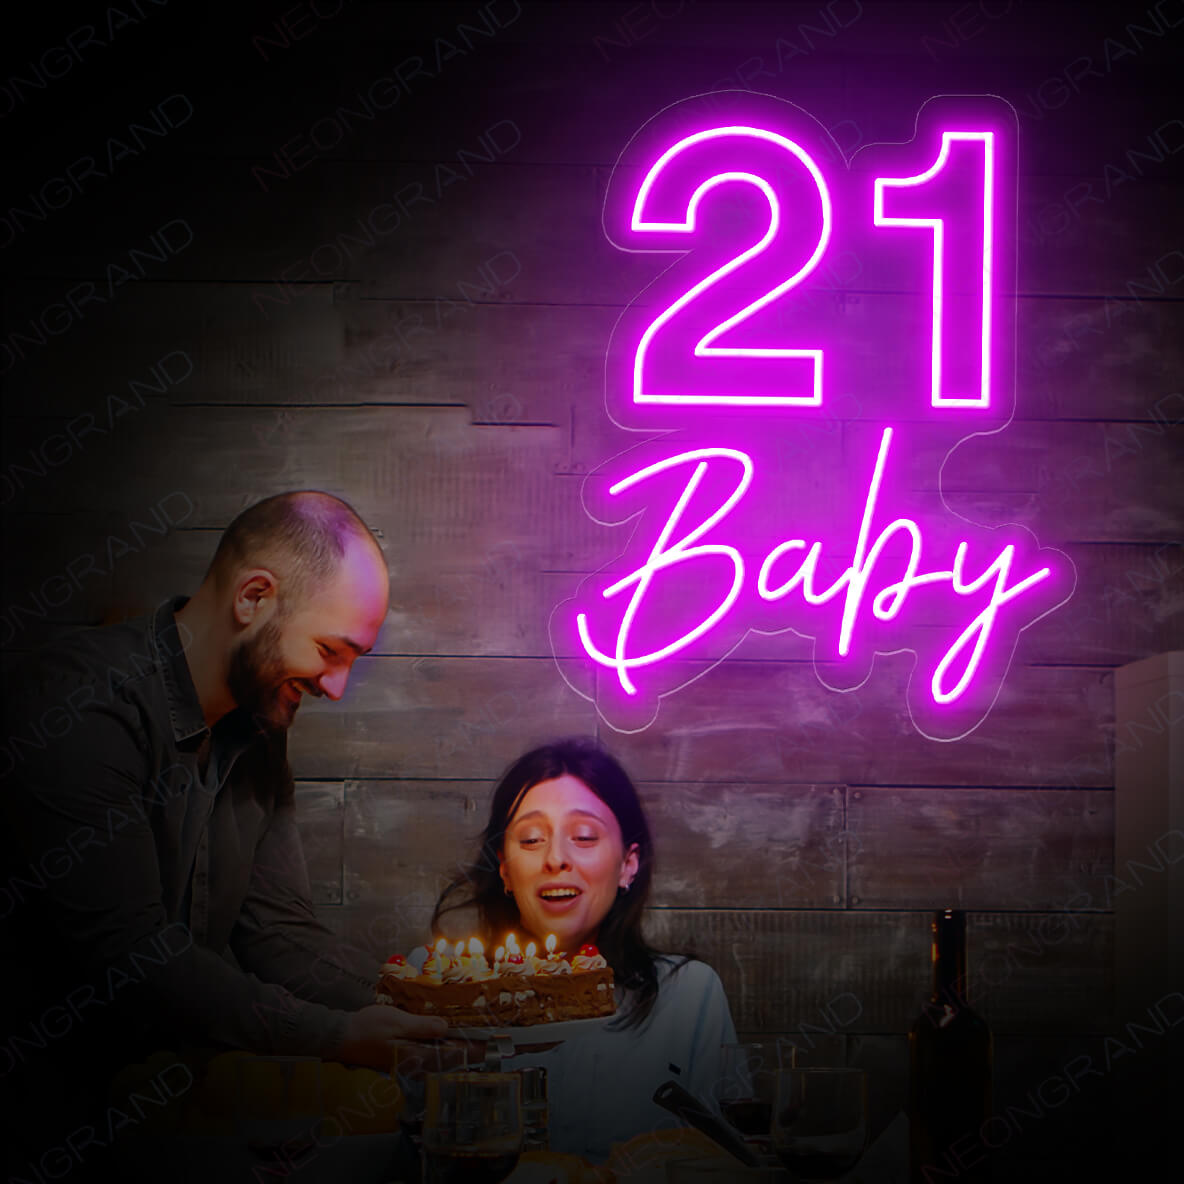 Custom Age 21 Baby Neon Sign Happy Birthday Led Sign Purple